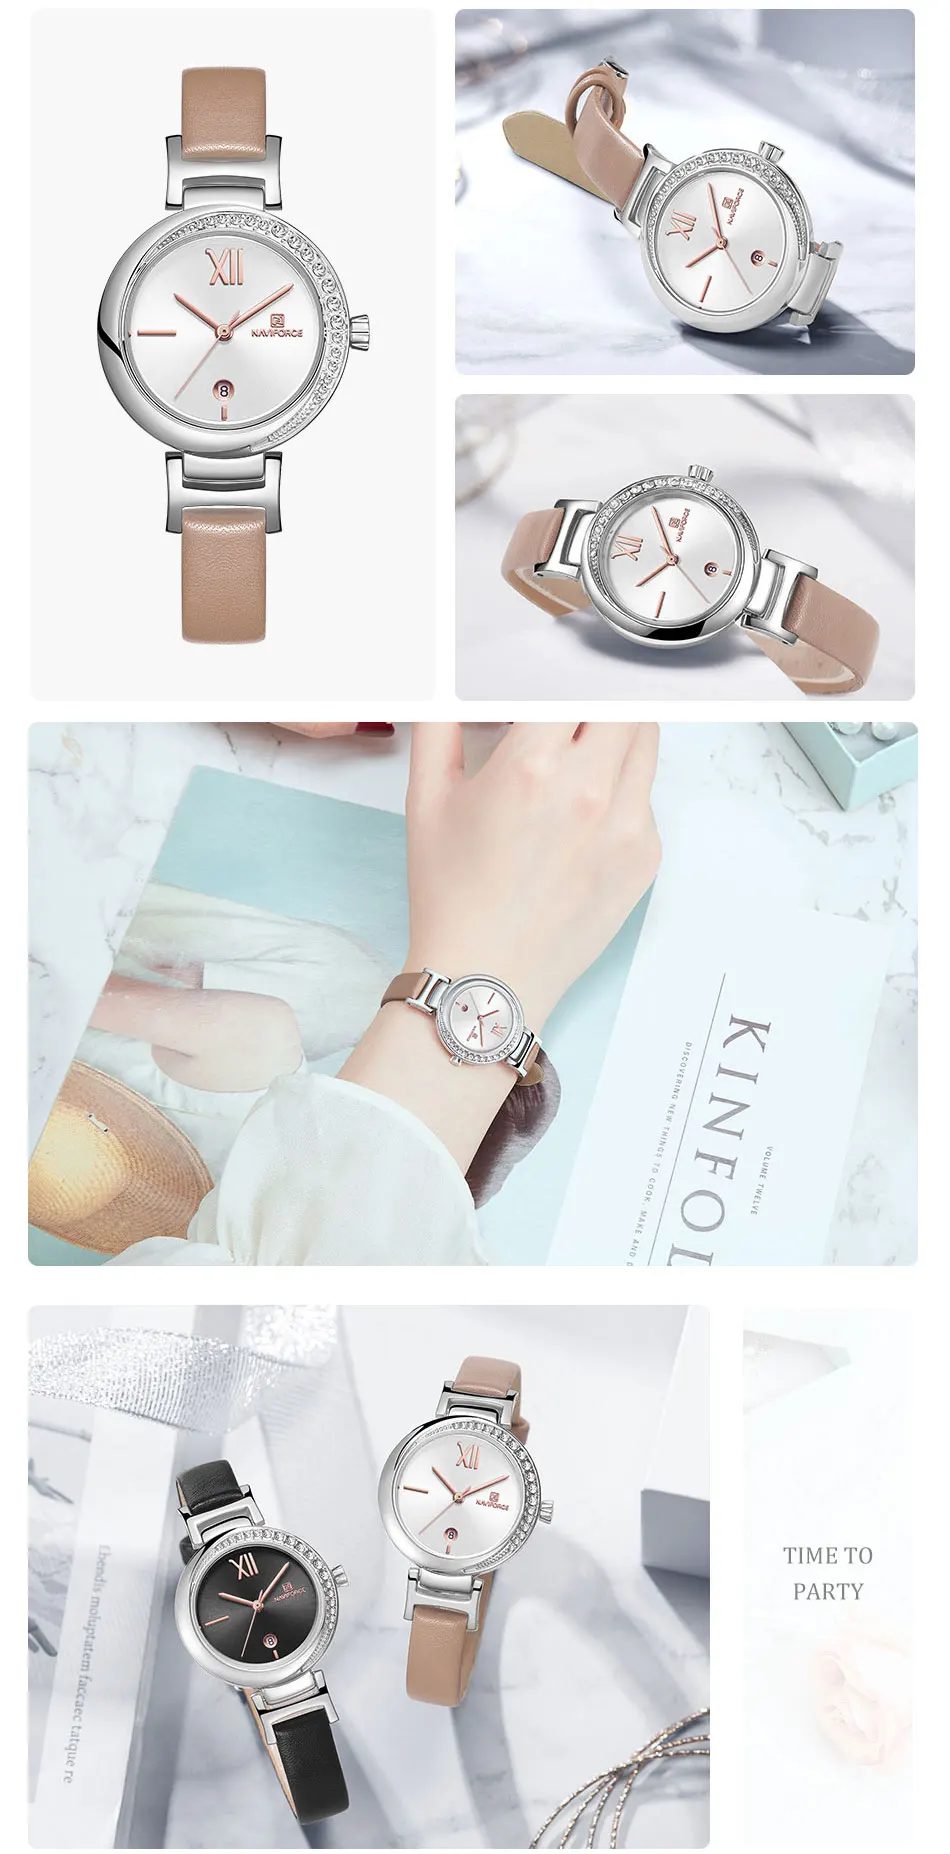 NAVIFORCE элегантные часы Женская Роскошная марка, Женская кварцевые Кожаный ремешок водонепроницаемые часы Reloj Mujer Relogio Feminino